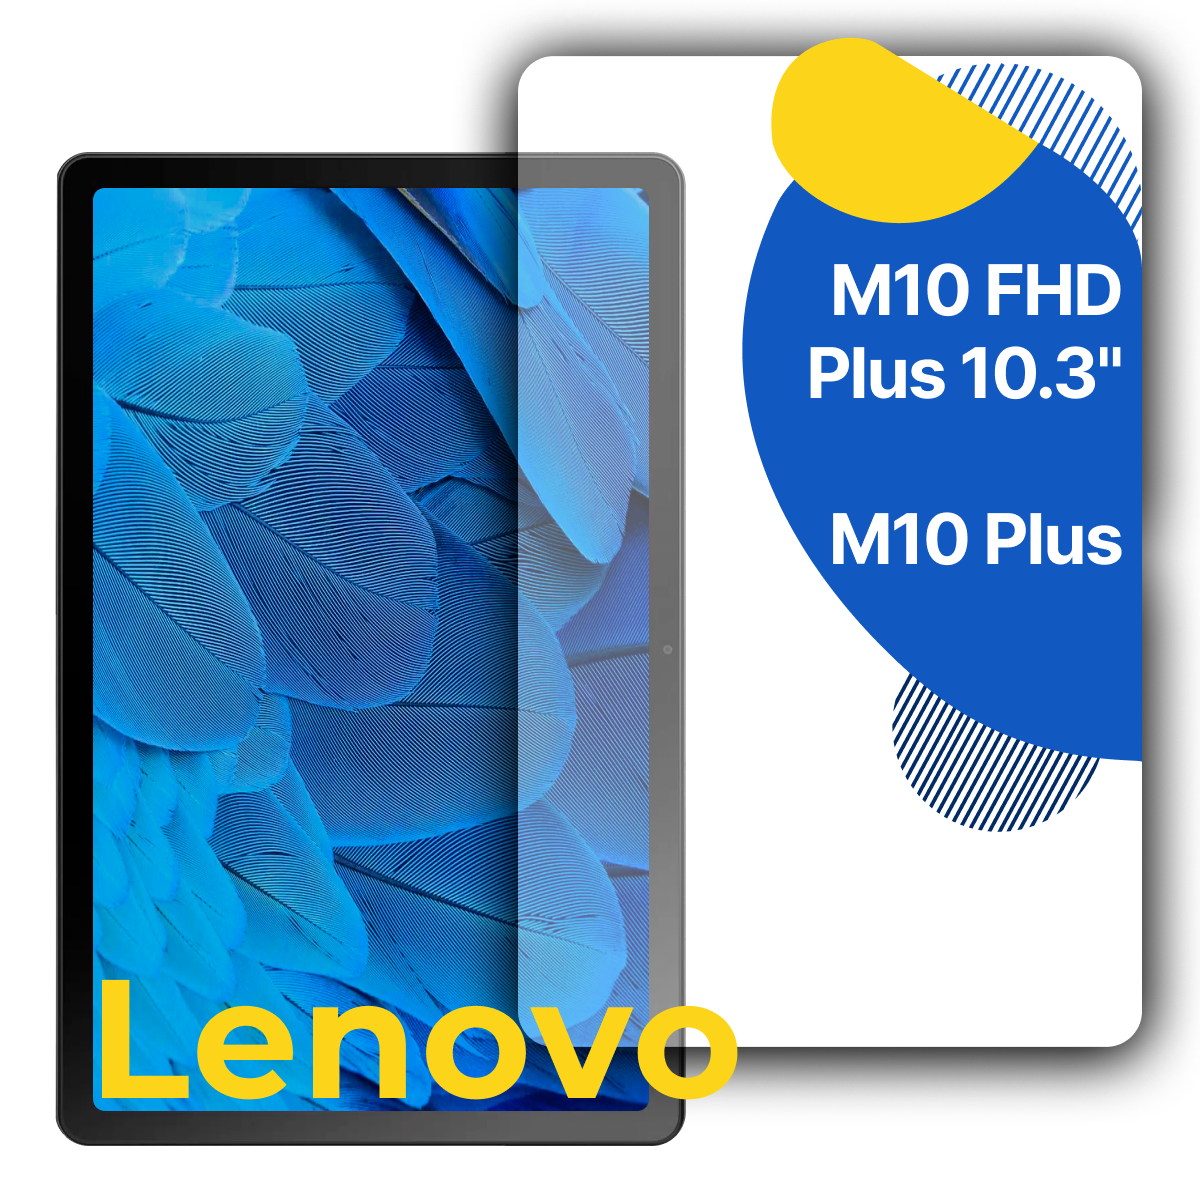 Защитное полноэкранное стекло на планшет Lenovo M10 Plus, M10 FHD Plus 10.3 / Противоударное стекло для Леново Таб М10 Плюс, М10 ФХД Плюс, Прозрачное